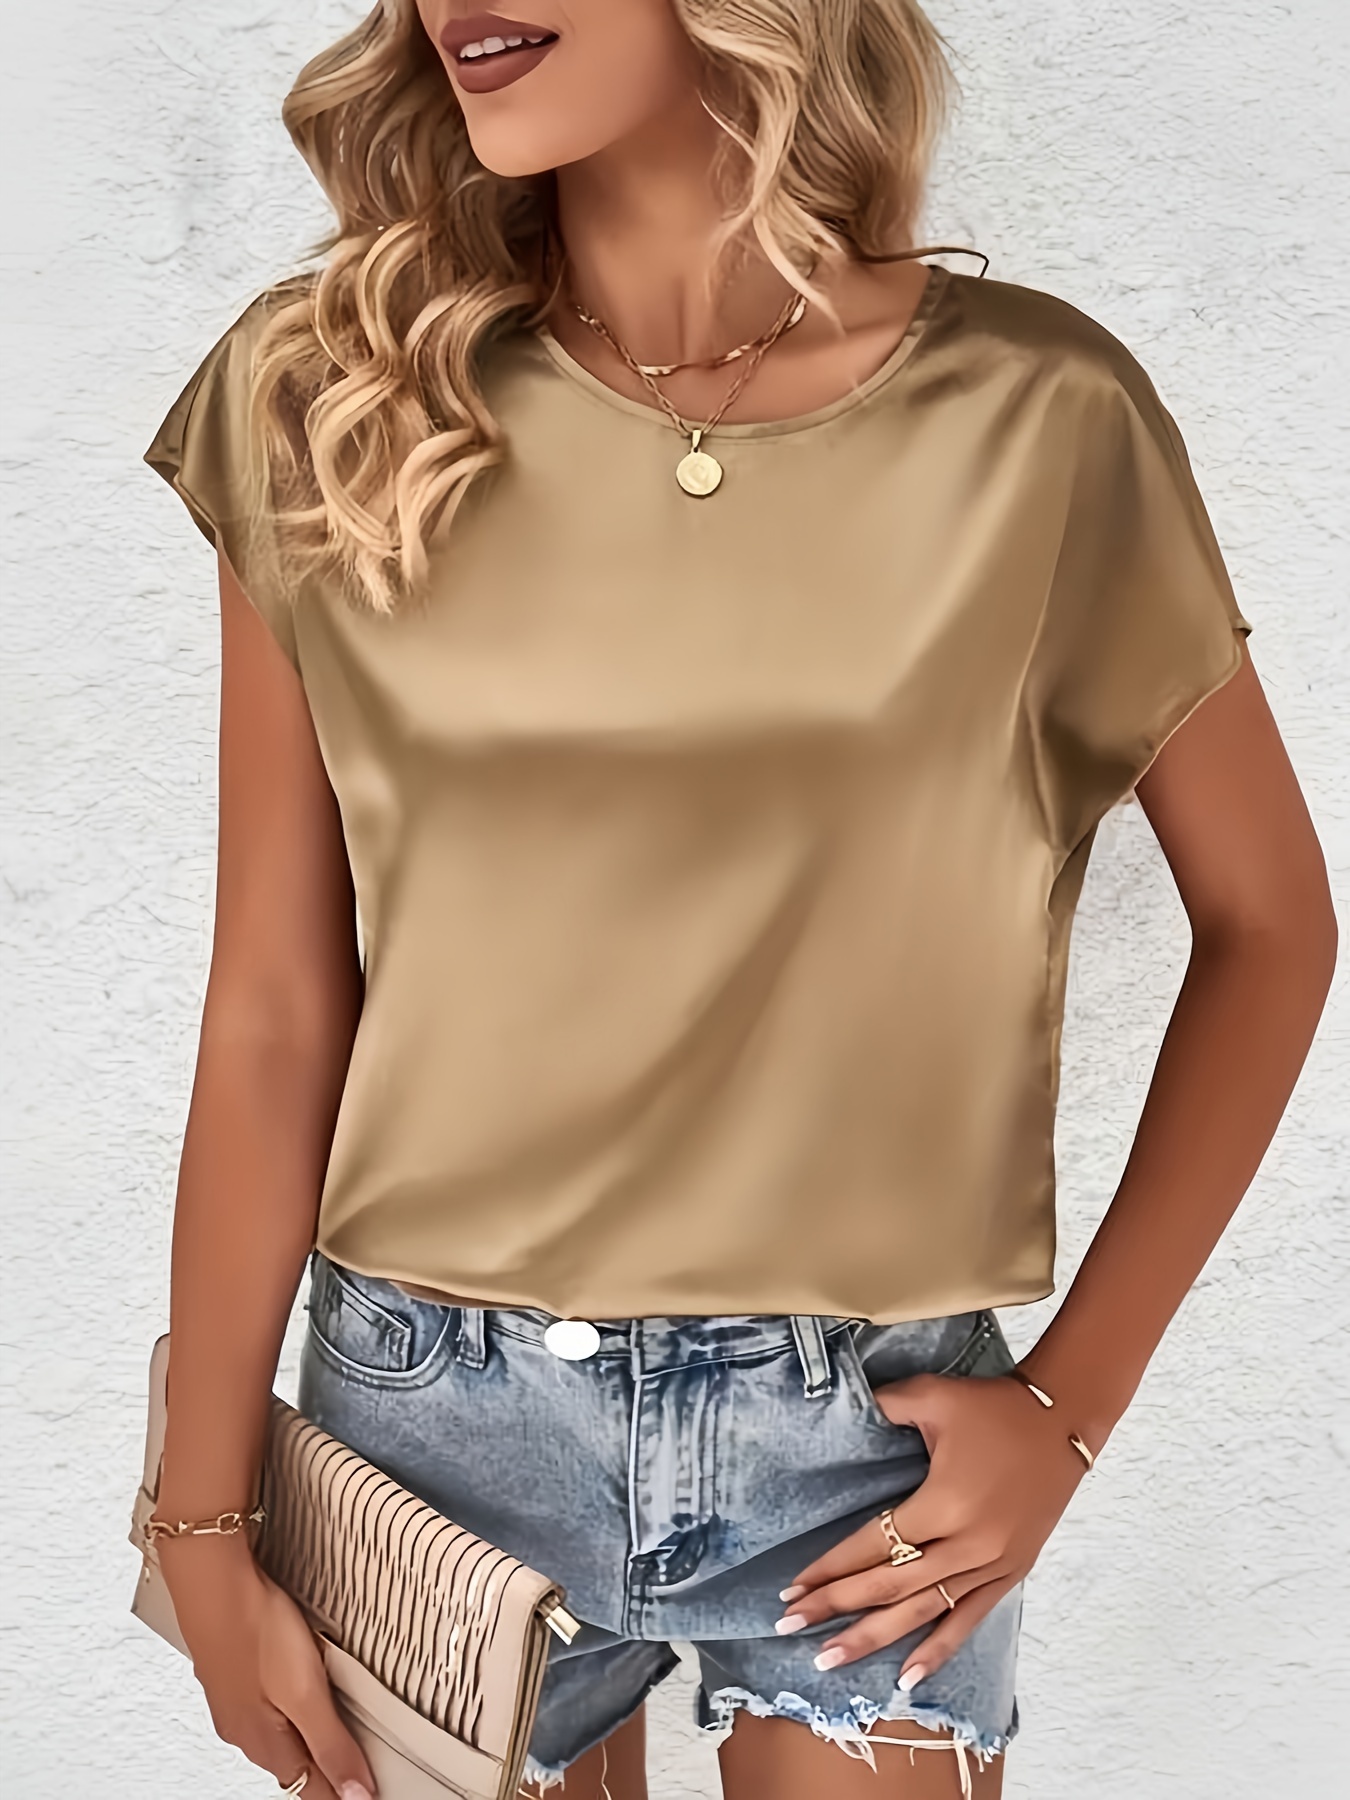 Josephine Chaus Gold Silk Blouse  Silk blouse, Gold silk, Clothes